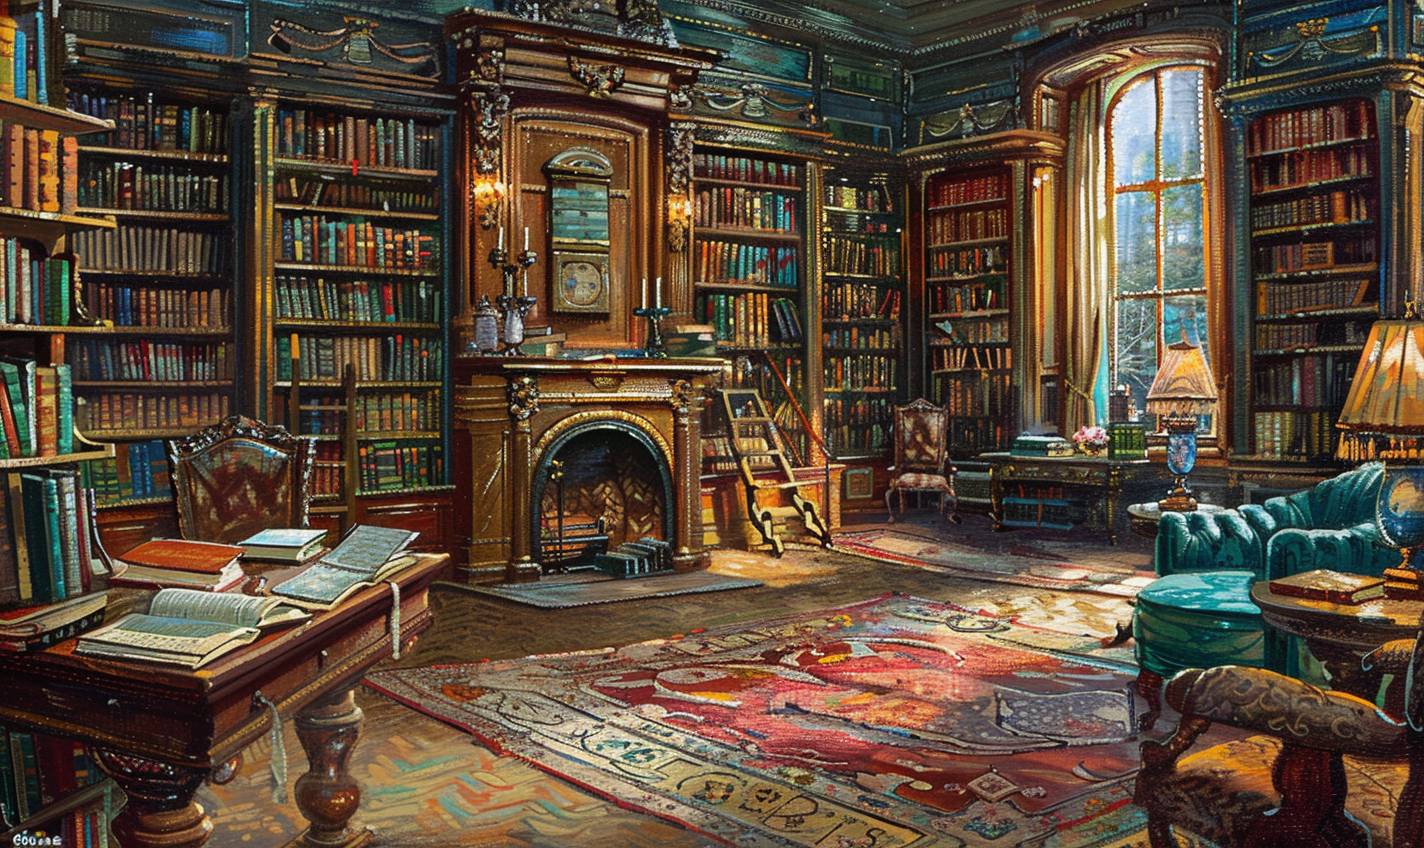 E.H. Shepardのスタイルで、終わりのない本棚が並ぶ永遠の図書館 --ar 5:3 --v 6.0